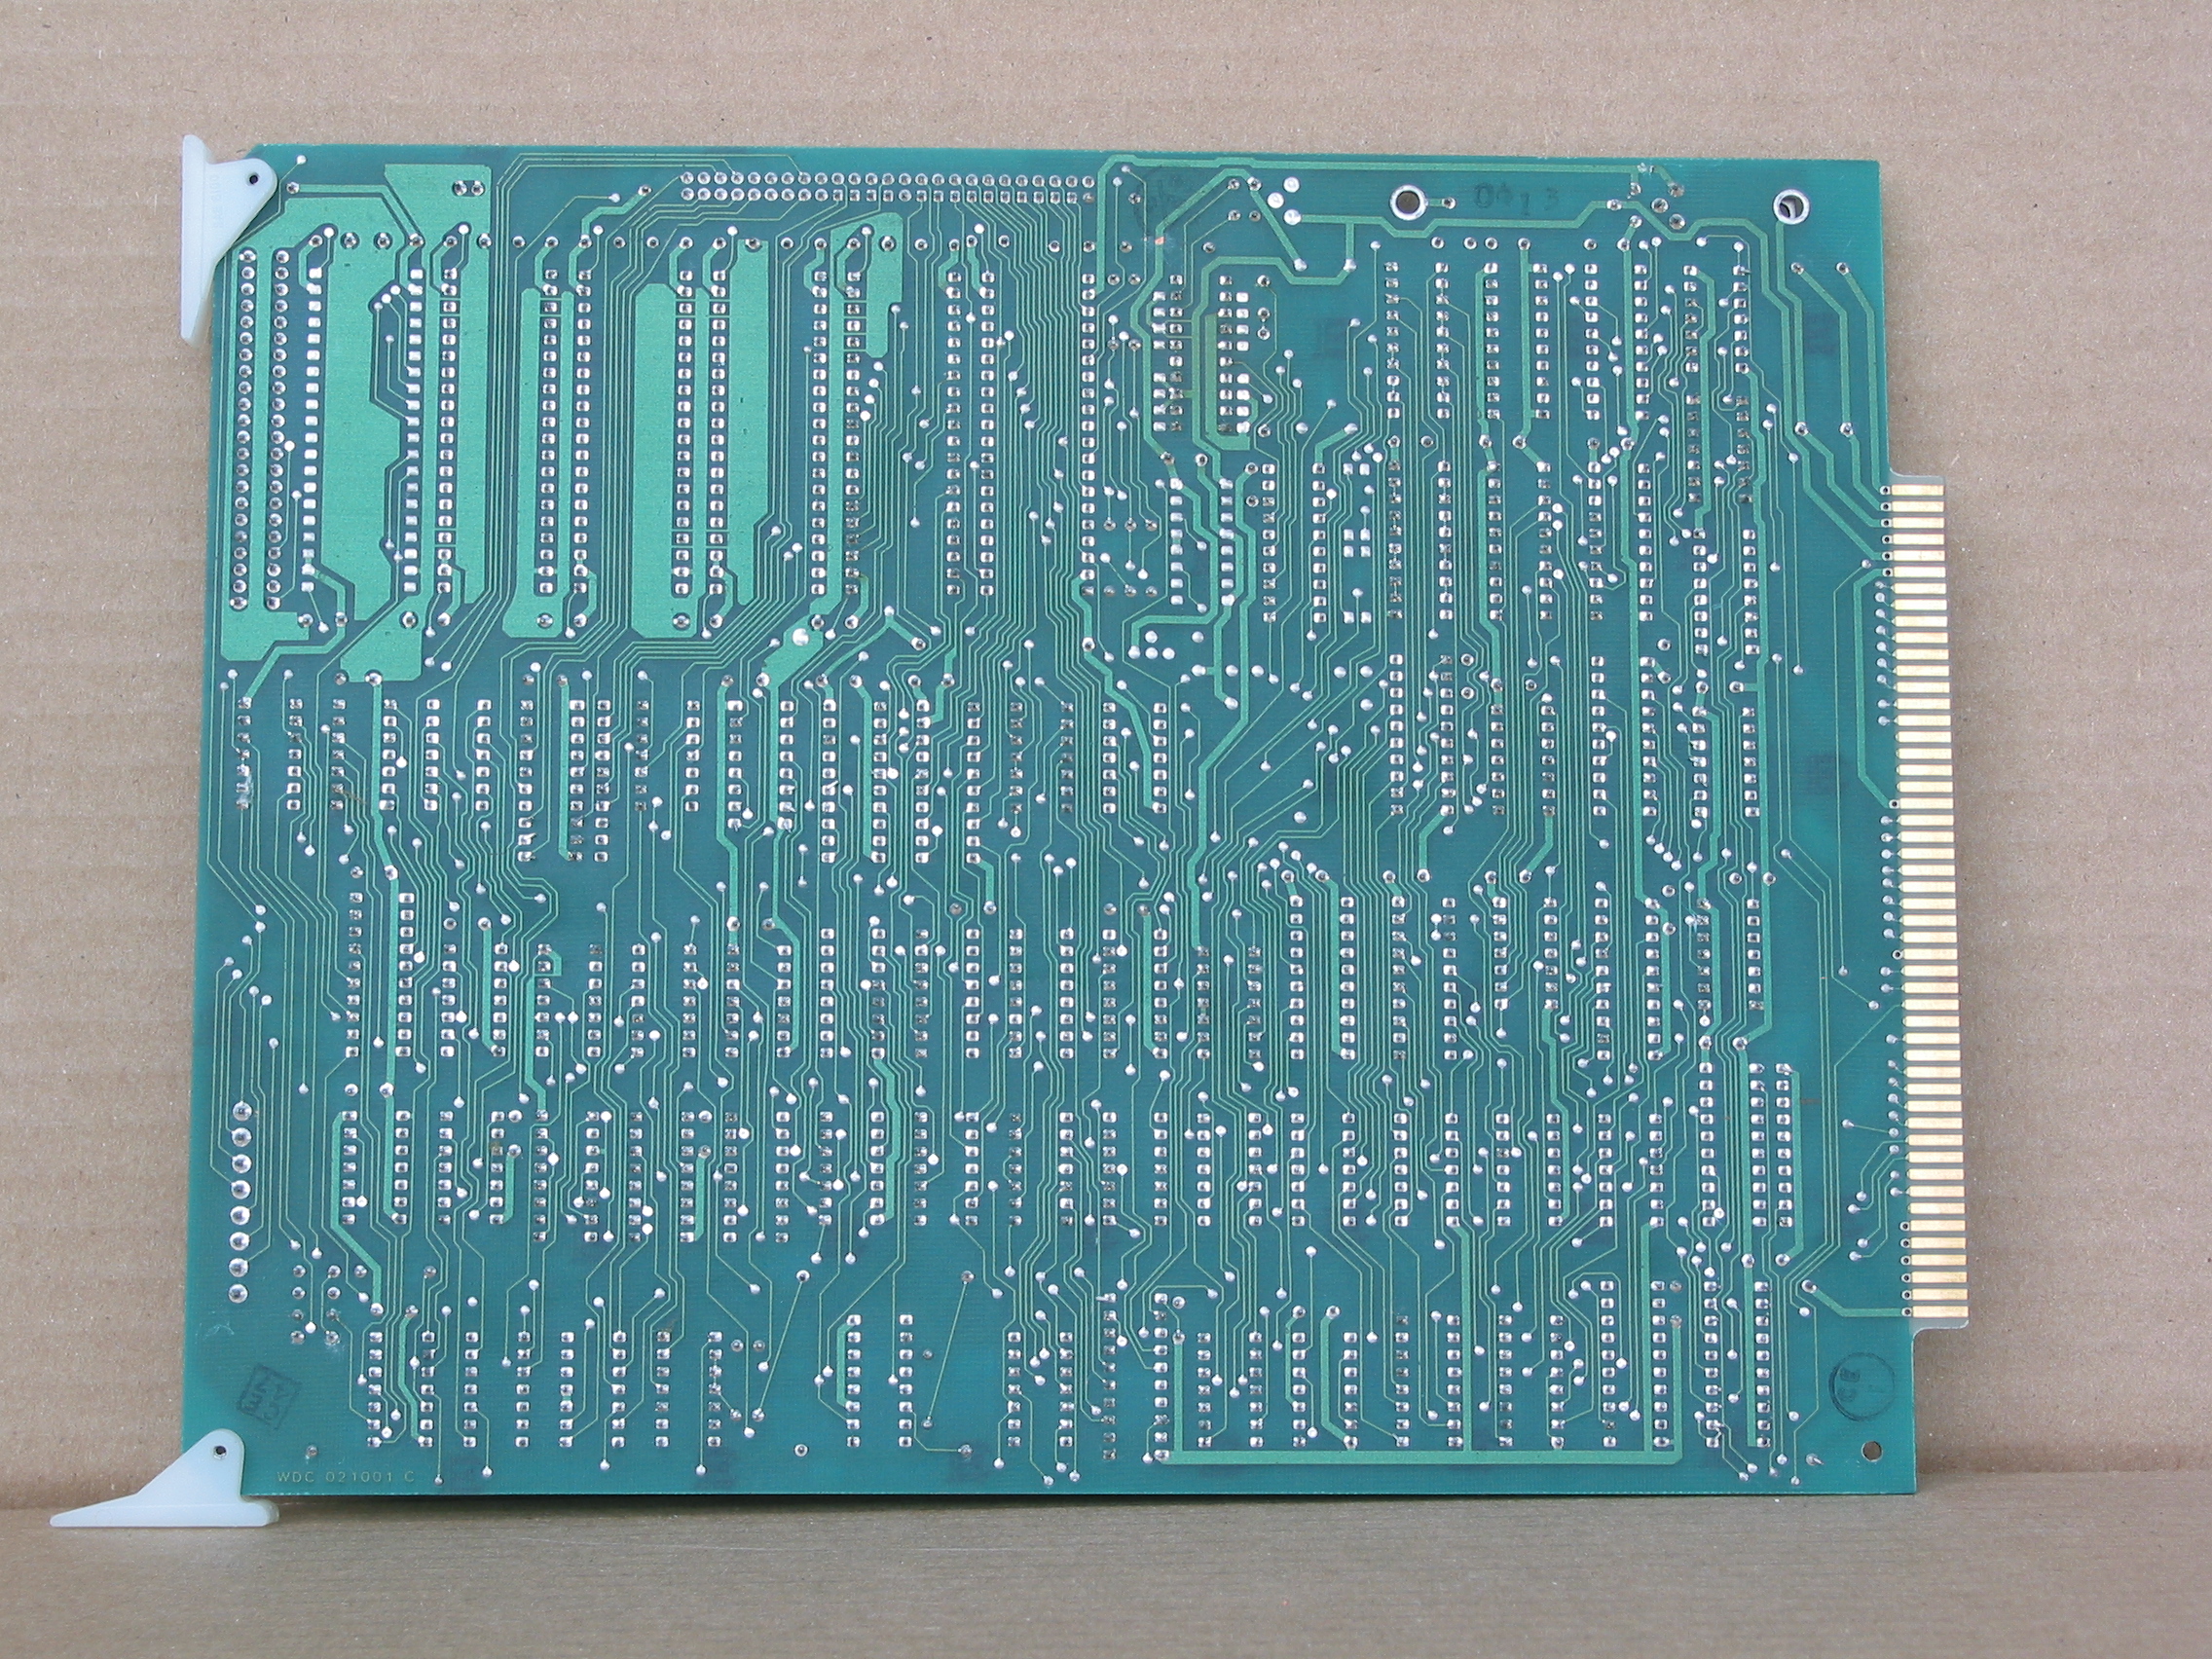 CPU card, circuit side